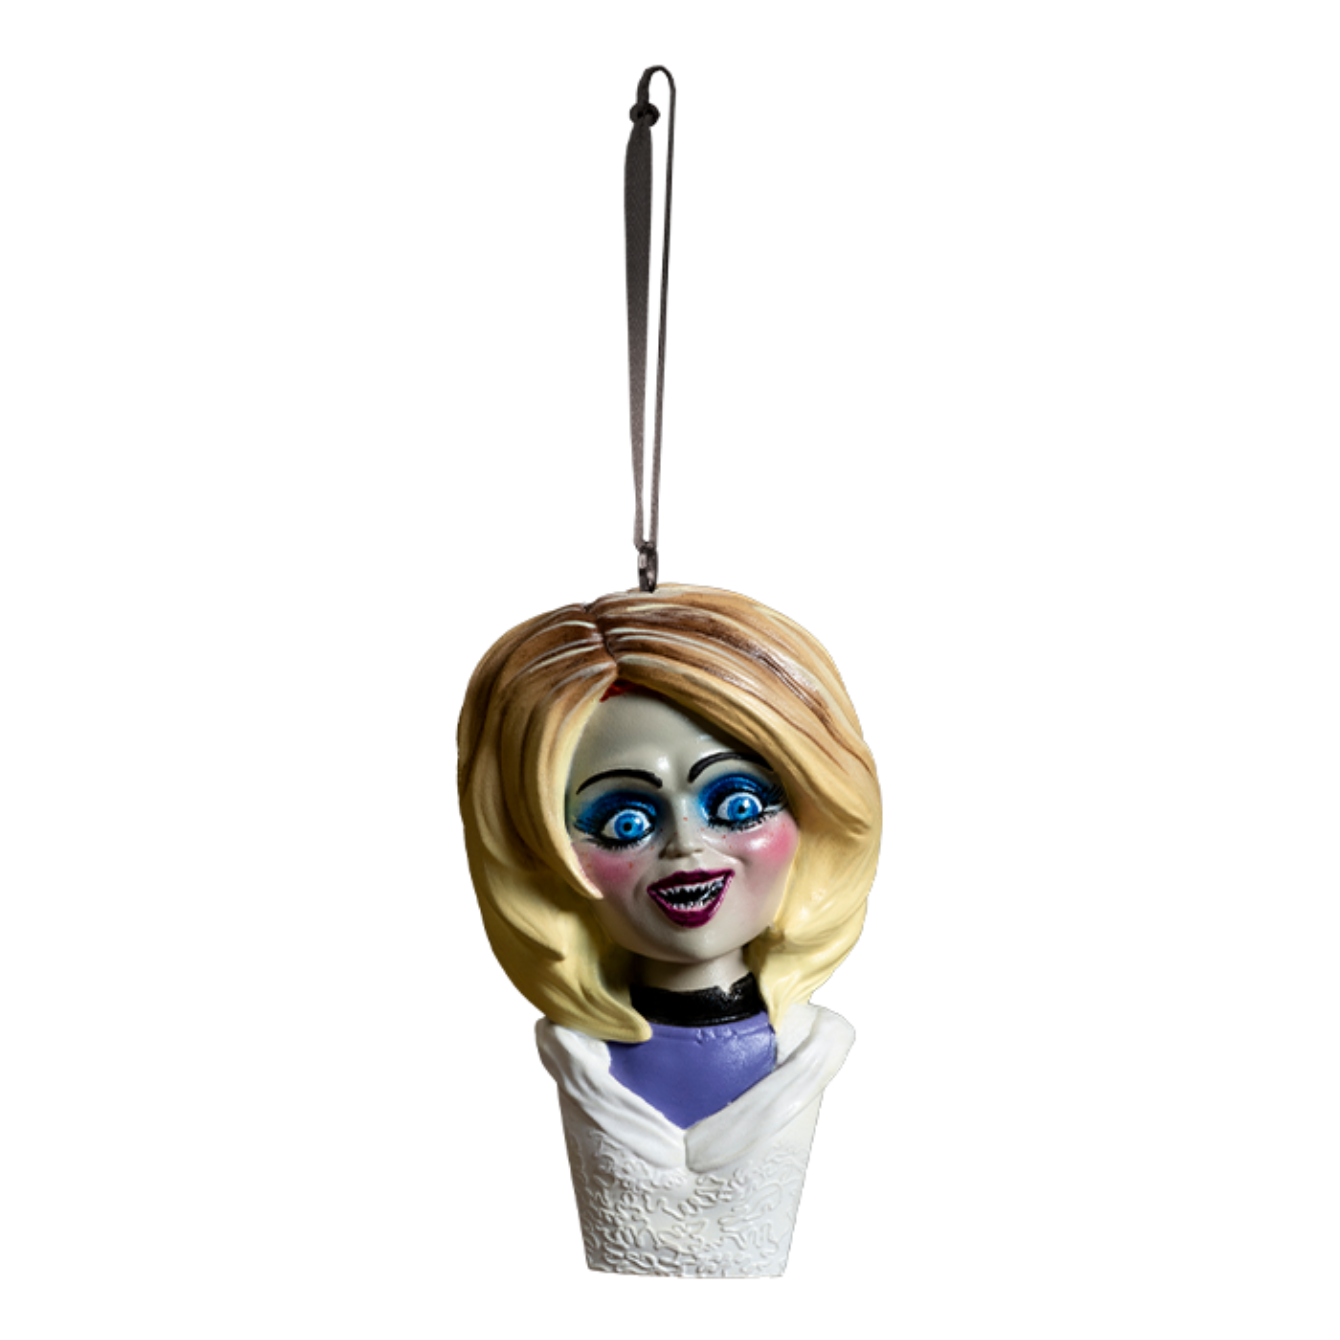 Seed of Chucky - Glenda Bust Ornament